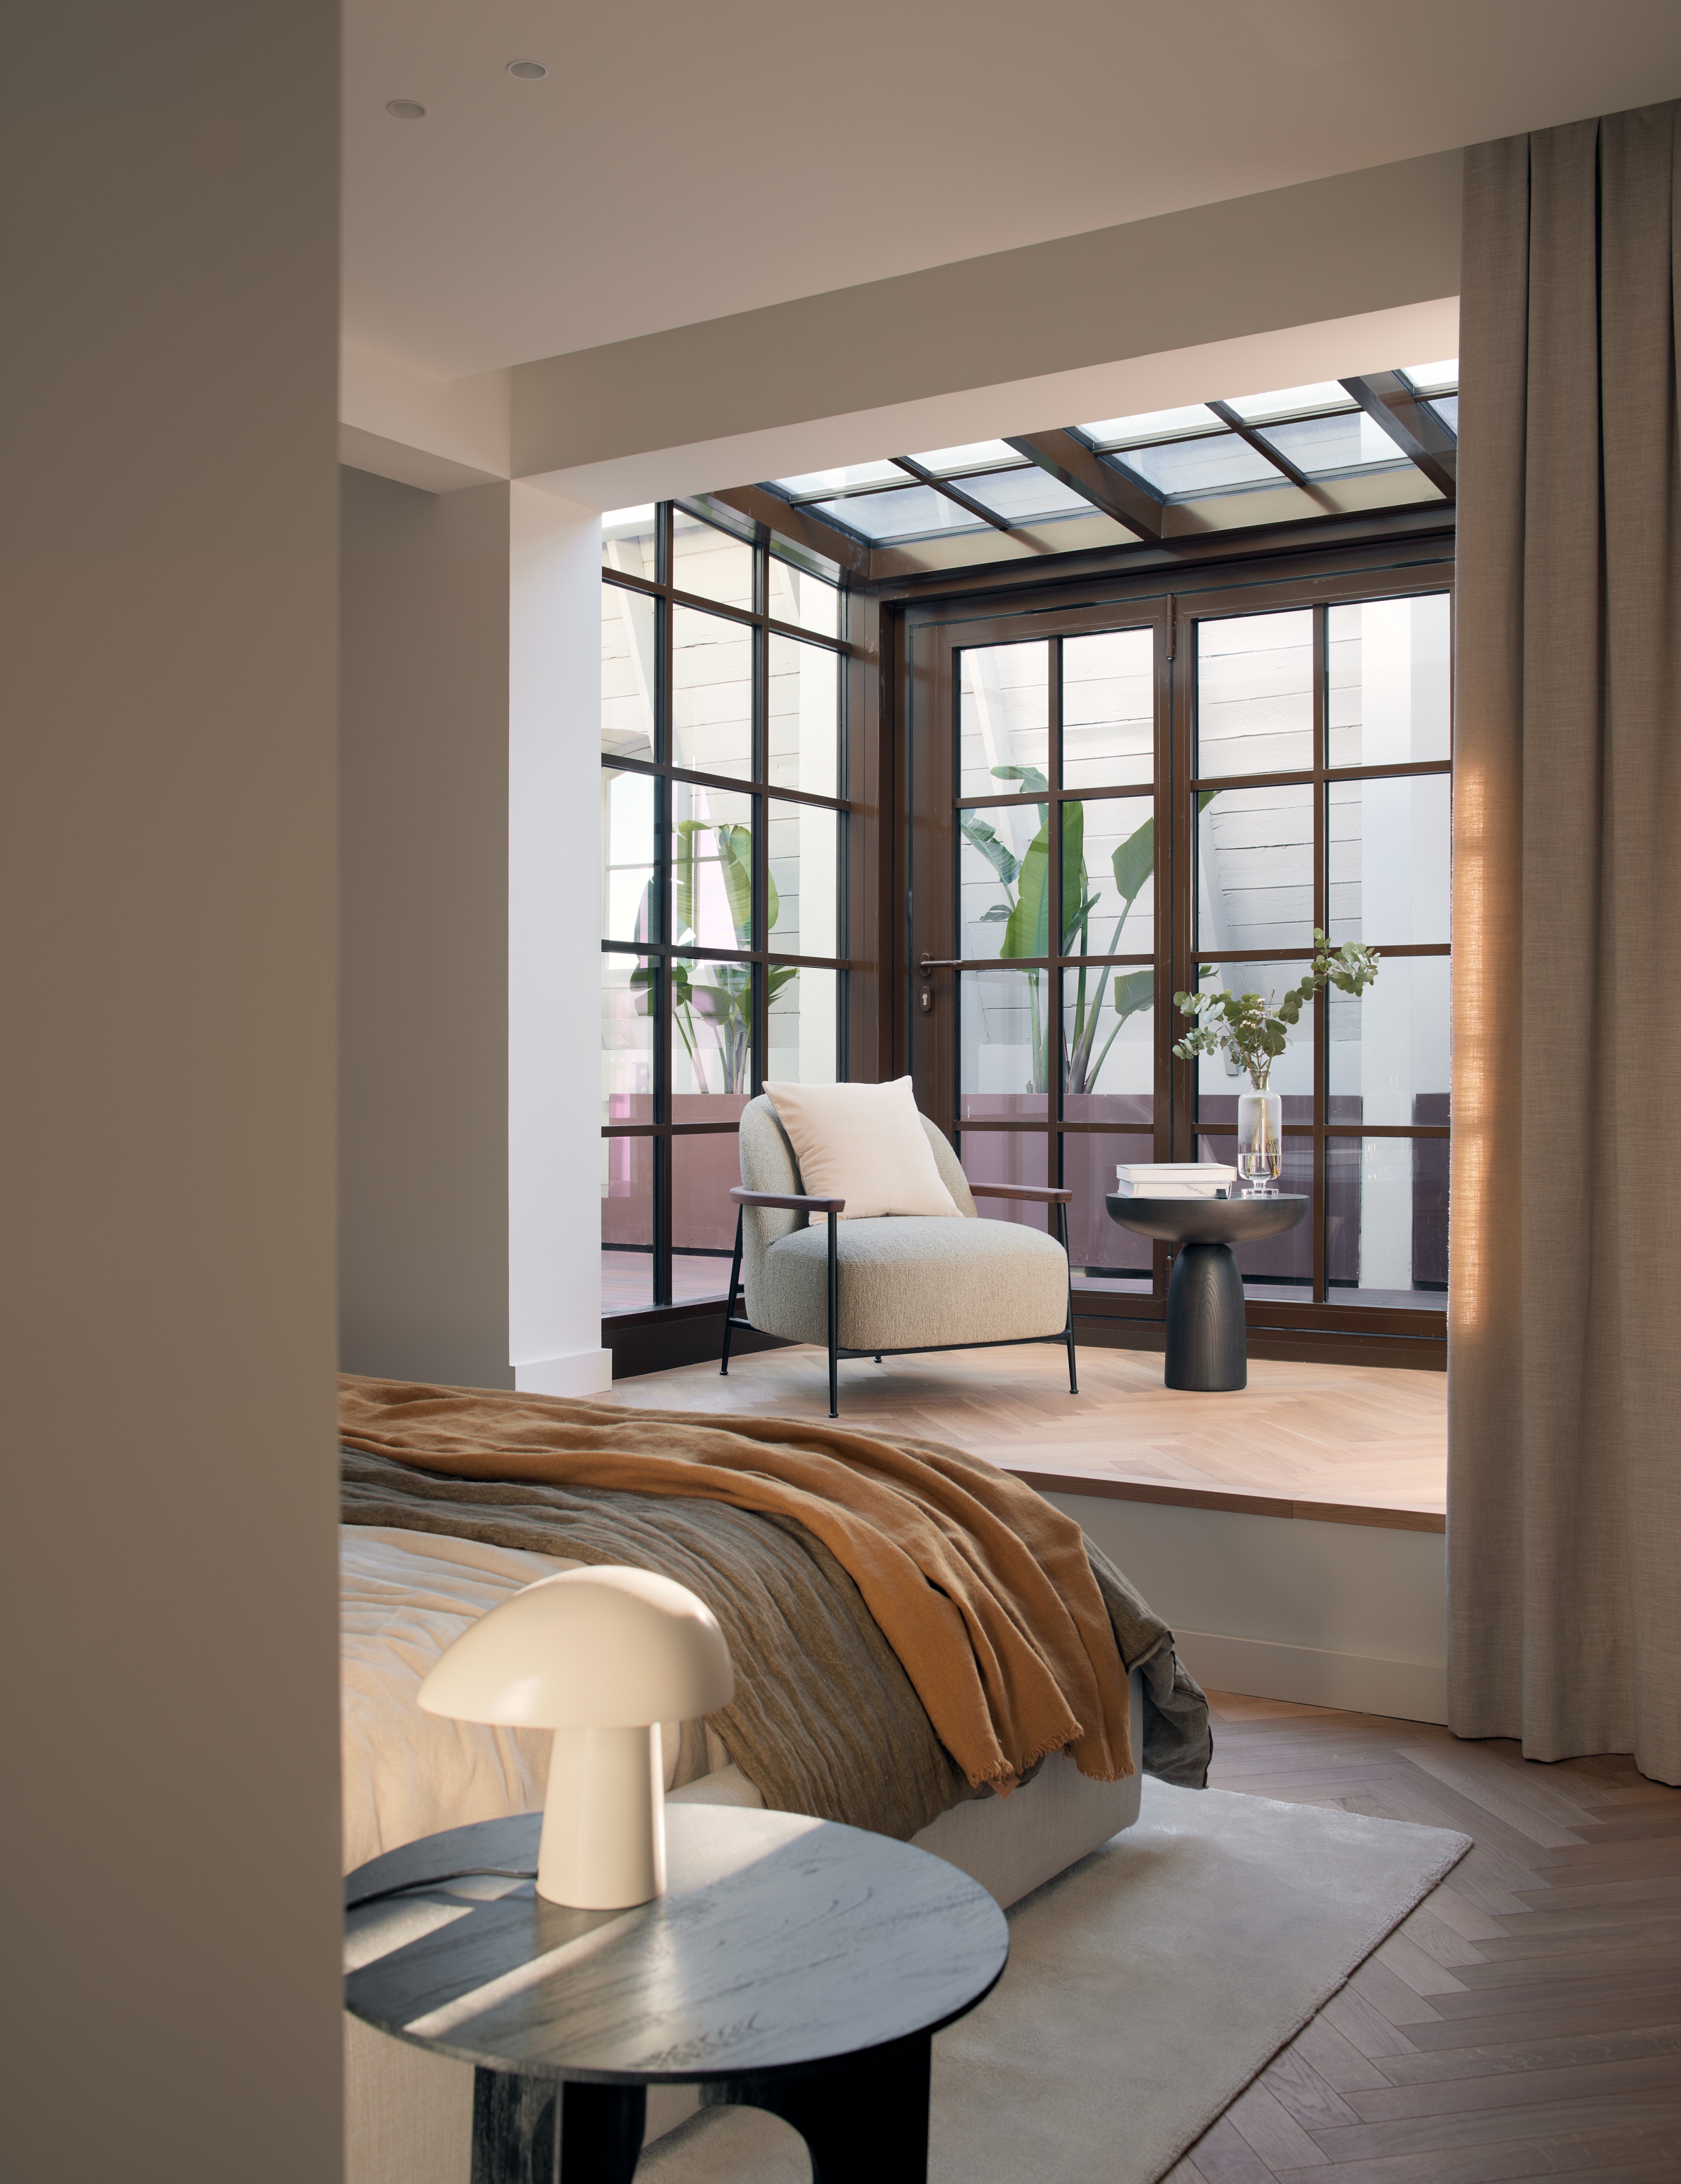 Pedralbes AV. Penthouse LUV Studio Bedroom 1 - LUV Studio - Arquitectura y diseño - Barcelona